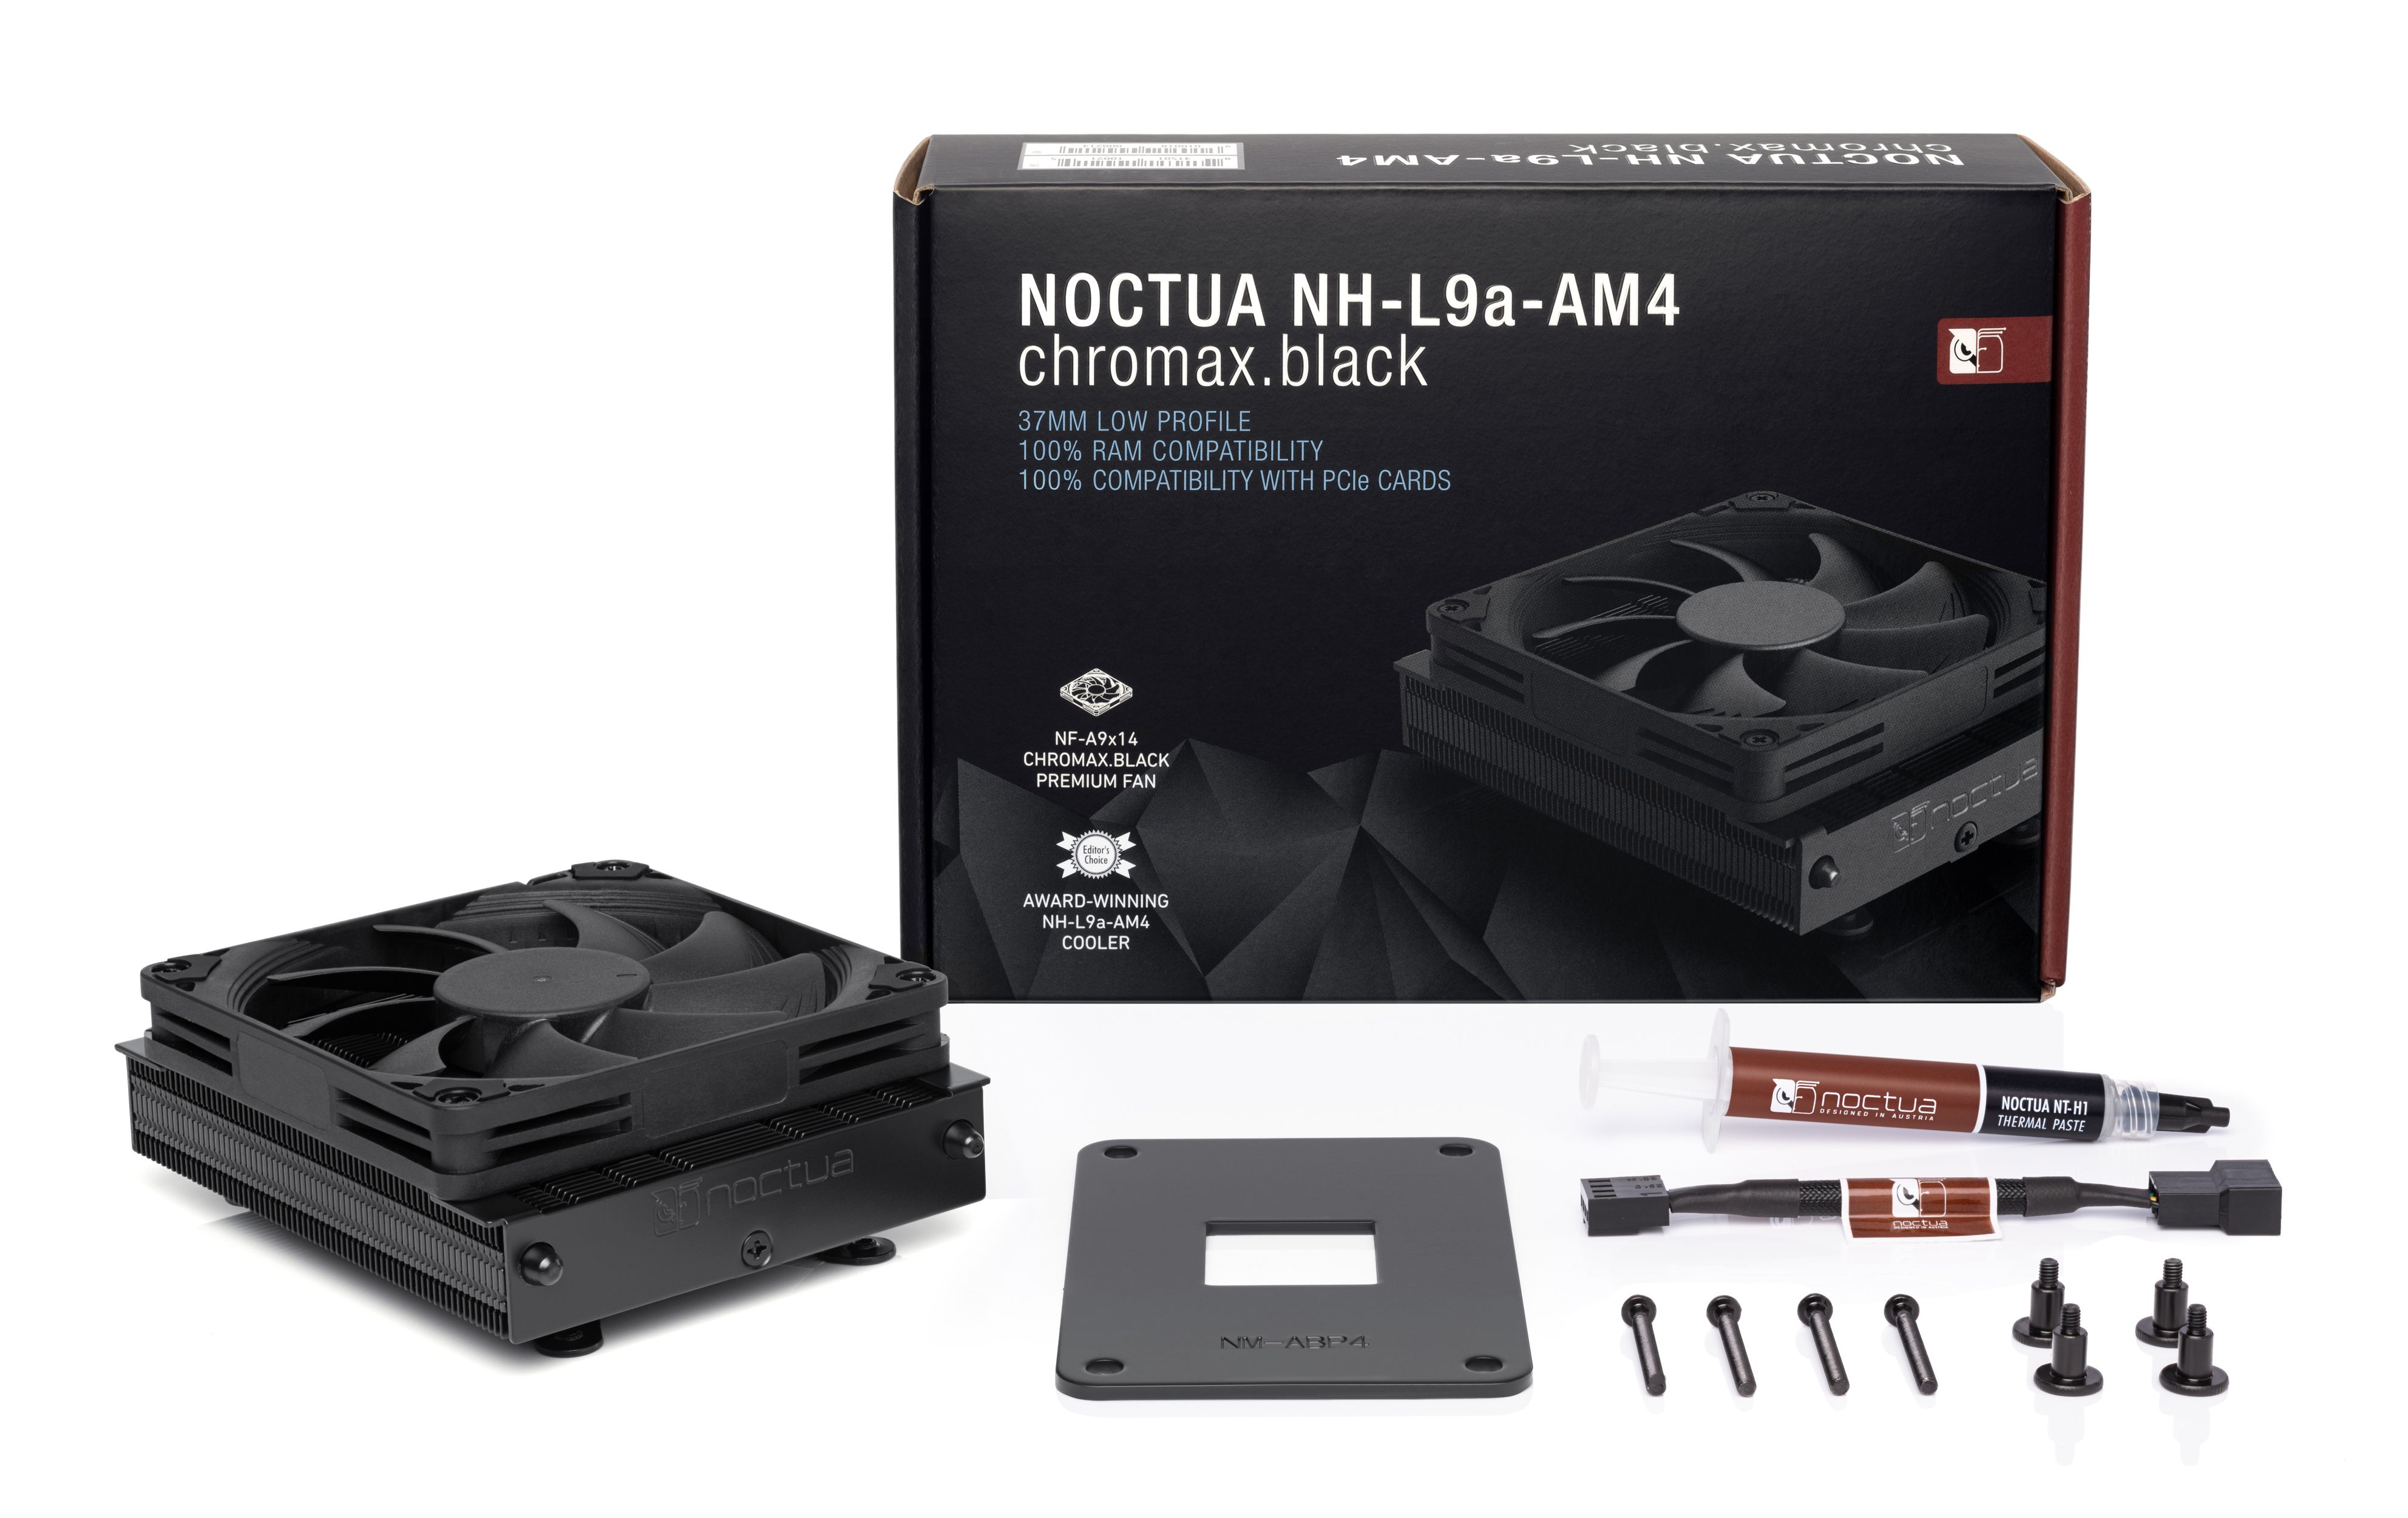 noctua nh-l9a-am4 chromax.black low-profile cpu cooler for am4